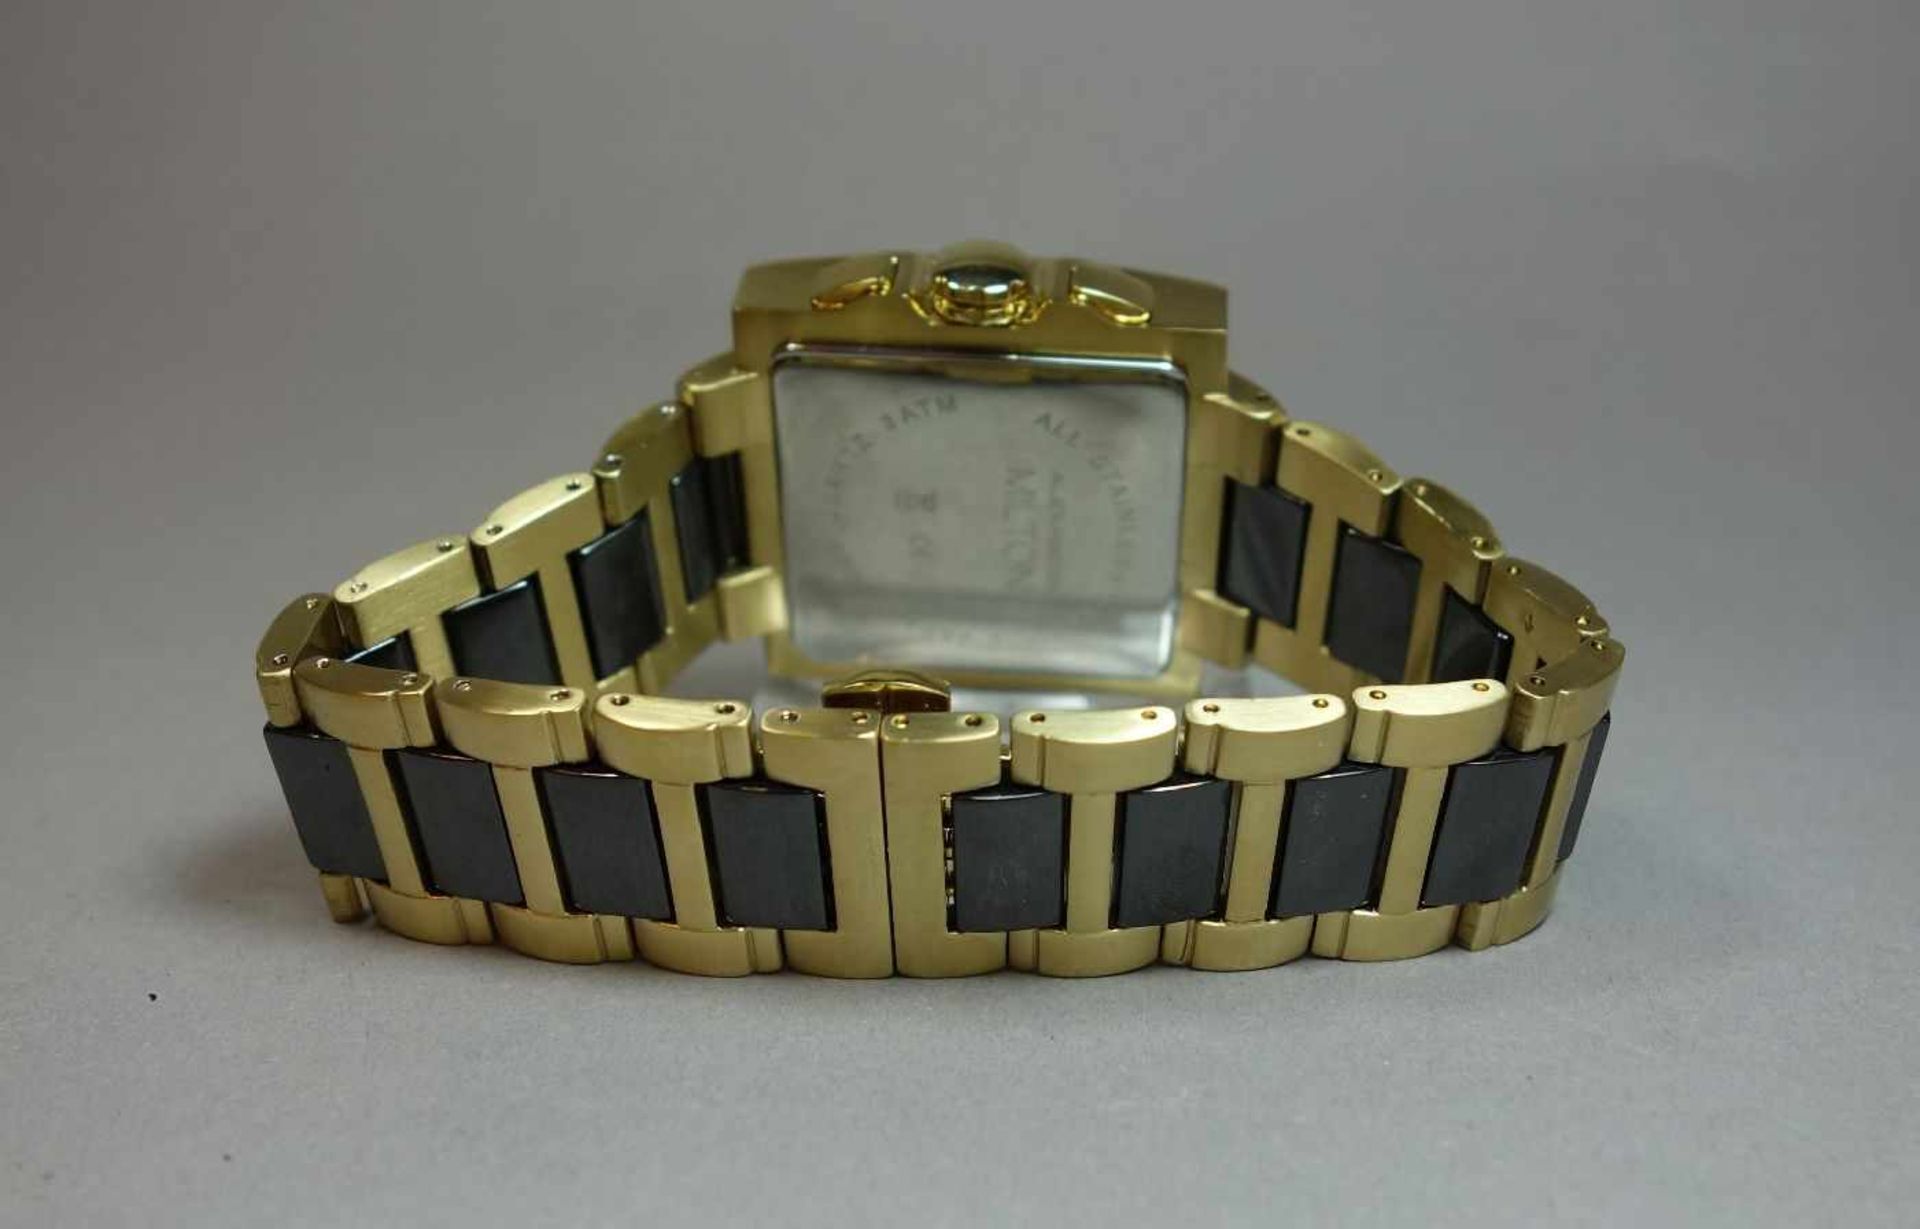 KERAMIK-ARMBANDUHR ALEXANDER MILTON - CHRONOGRAPH / wristwatch, Quarz-Uhr, Modell "Priamos", - Image 2 of 6